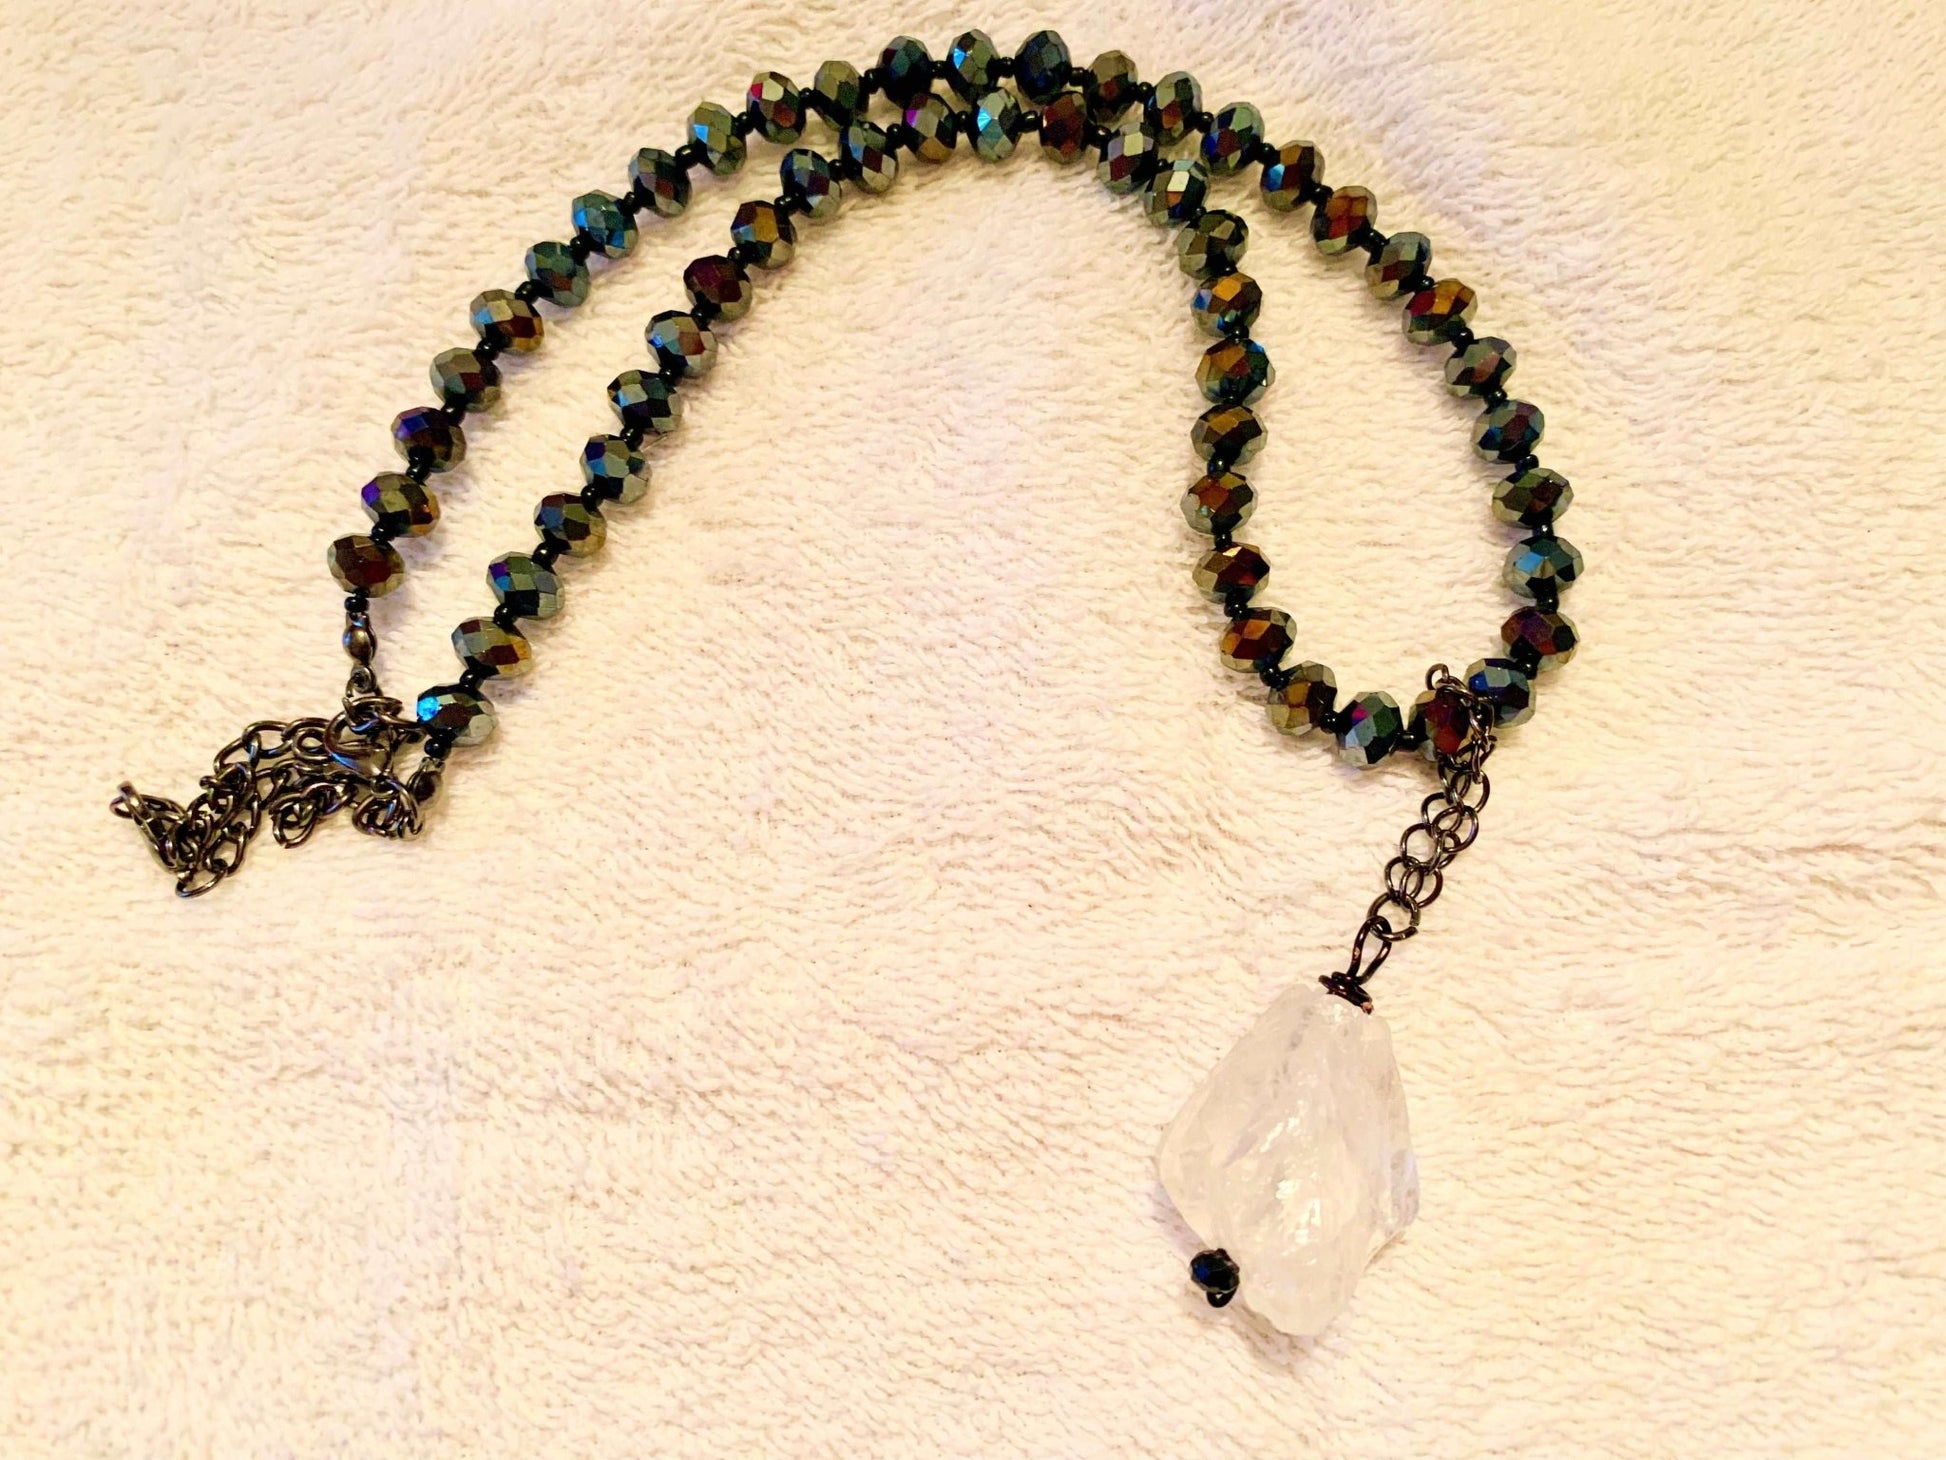 Aurora Handmade Beaded Chocker/ Necklace with a Chunky Raw White Quartz Crystal Pendant - Born Mystics